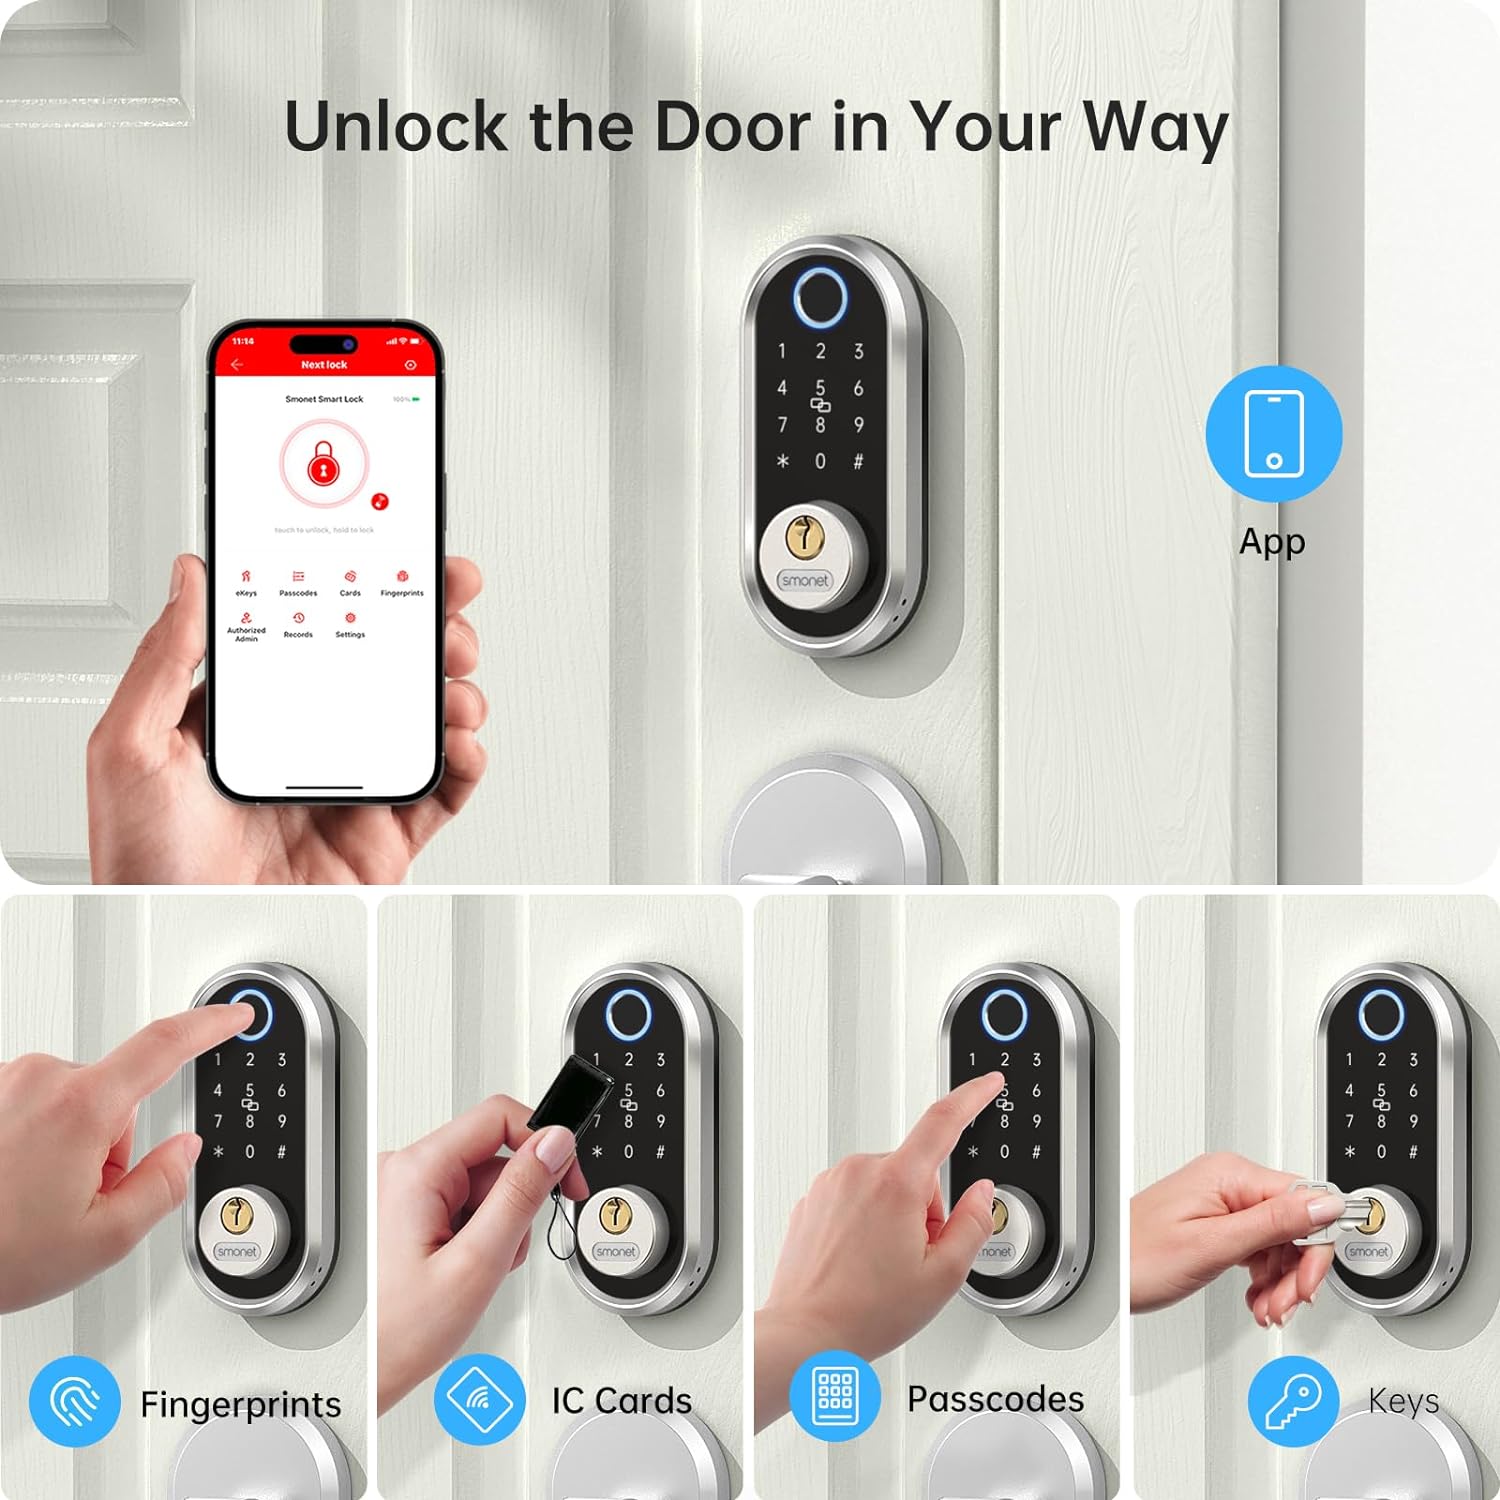 Smart door locks
                    Keyless entry locks
                    Home security technology 
            